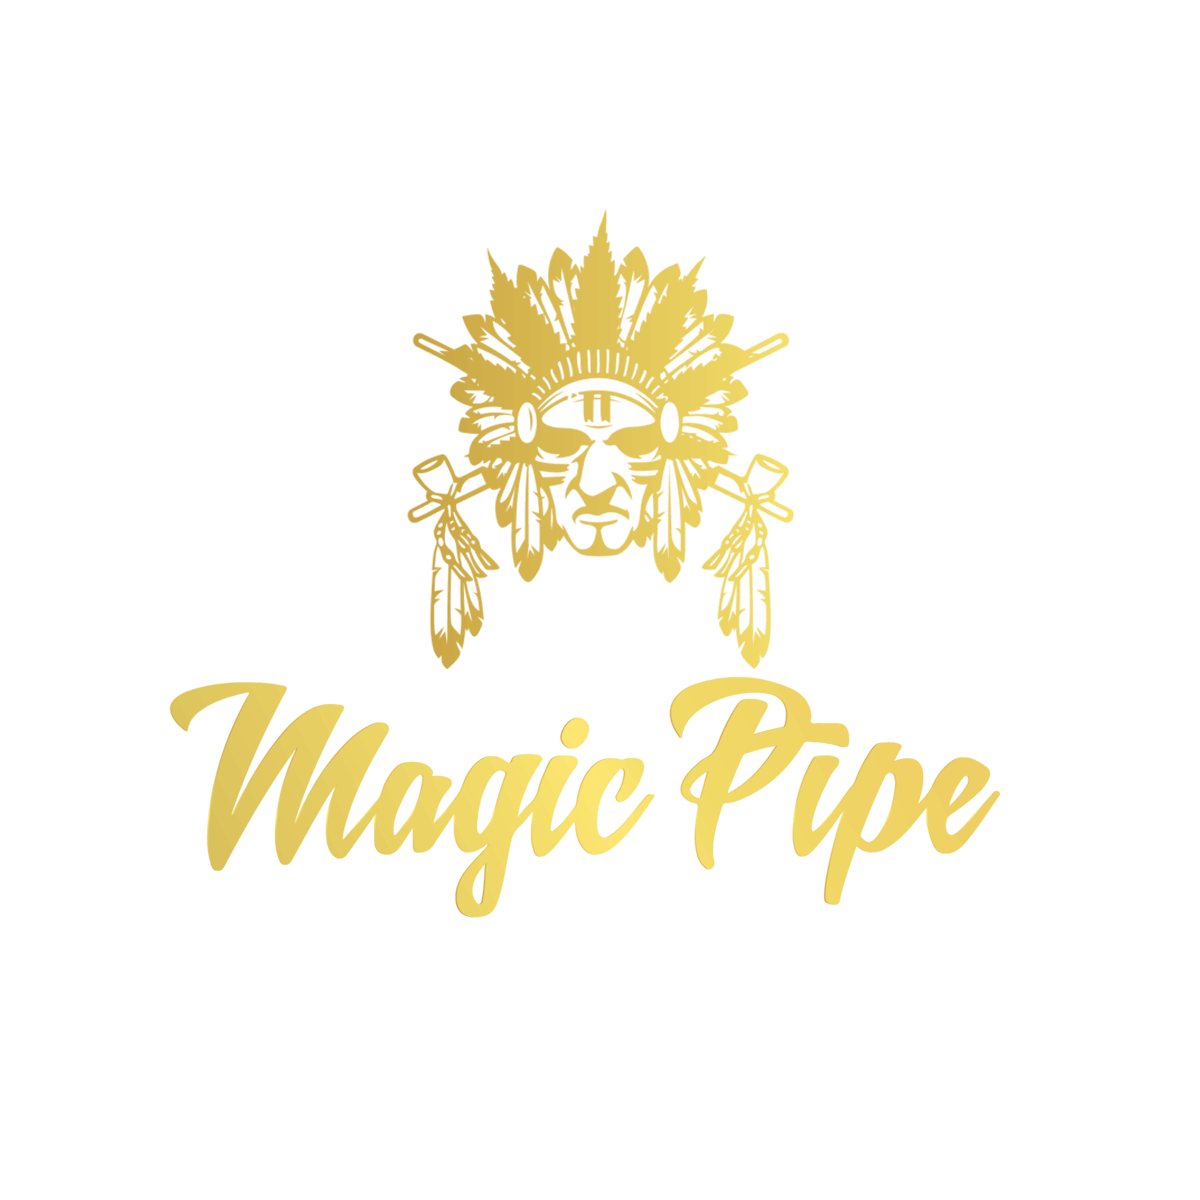 Magic Pipe